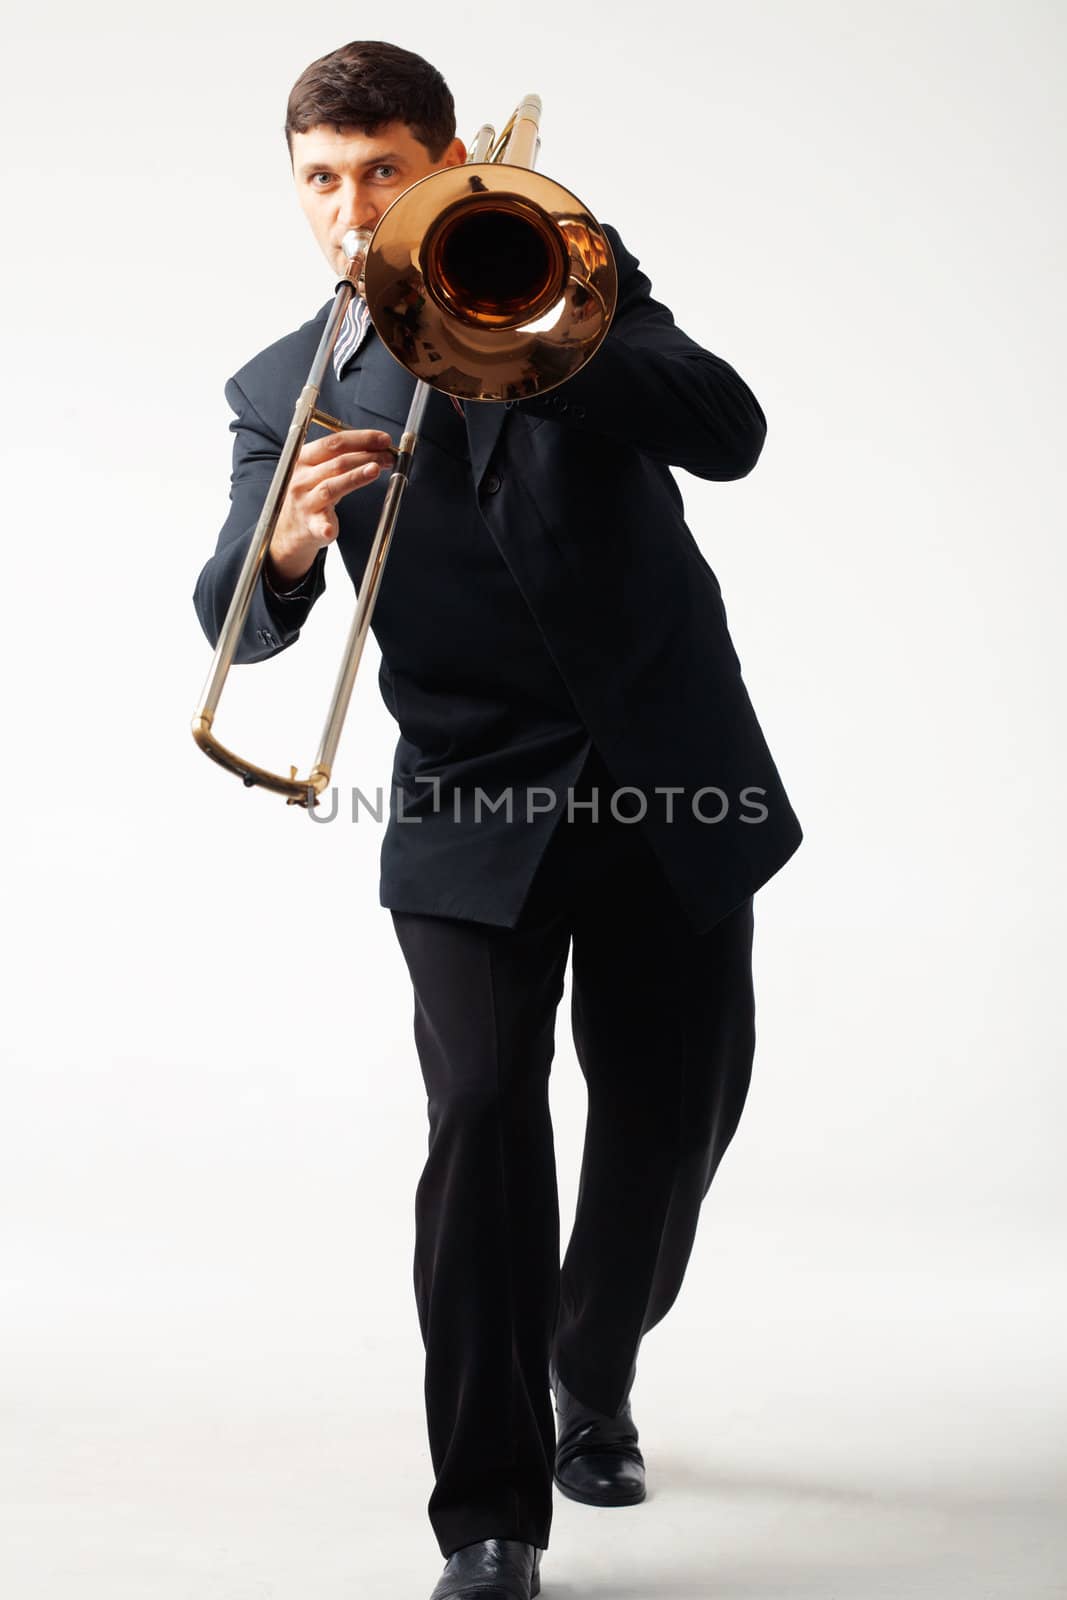 The Trombonist by romanshyshak